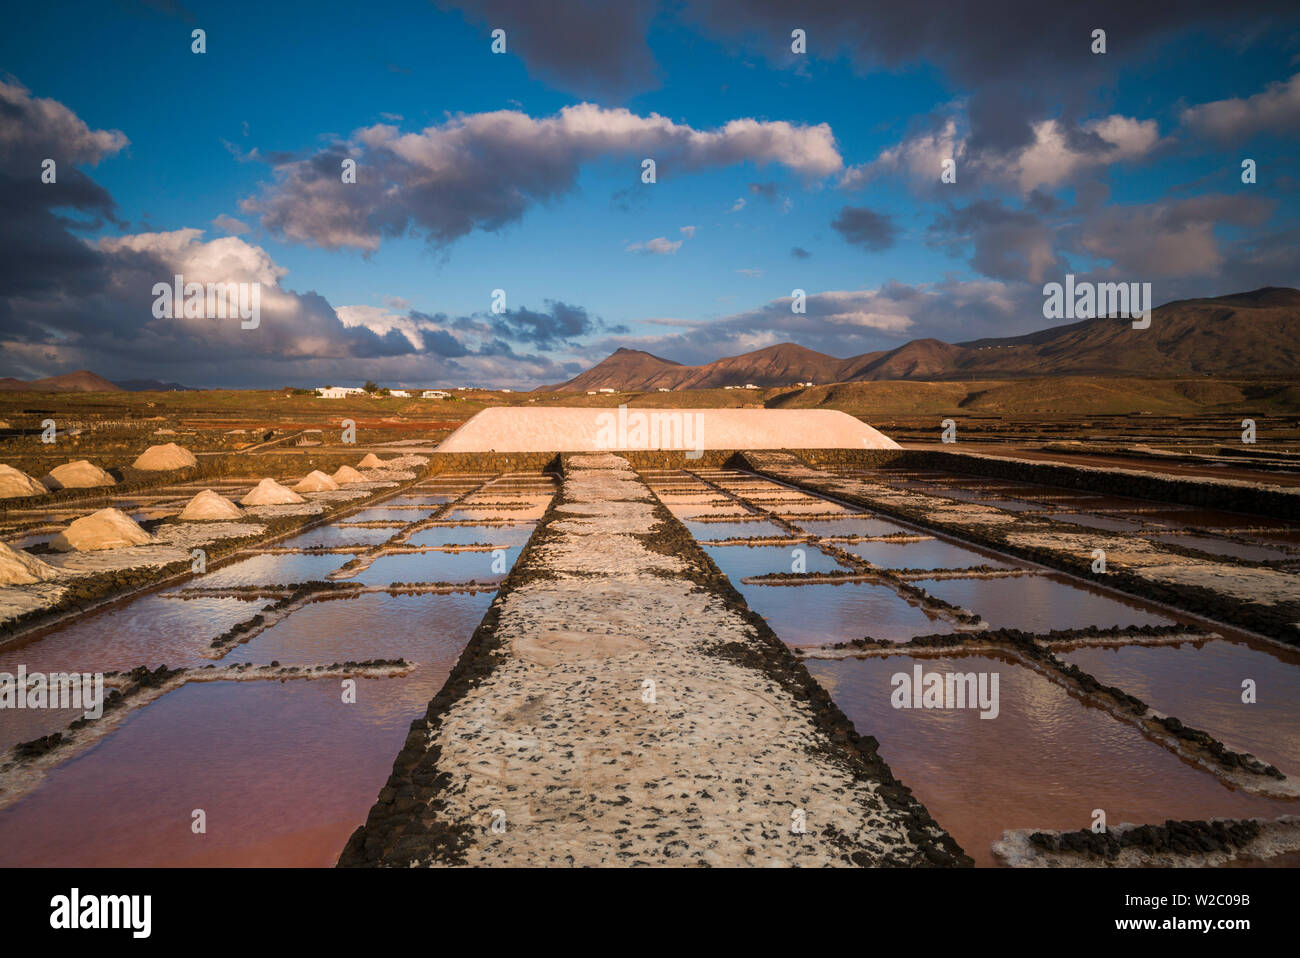 Spain, Canary Islands, Lanzarote, El Golfo, Salinas de Janubio, salt evaporation pans, sunset Stock Photo